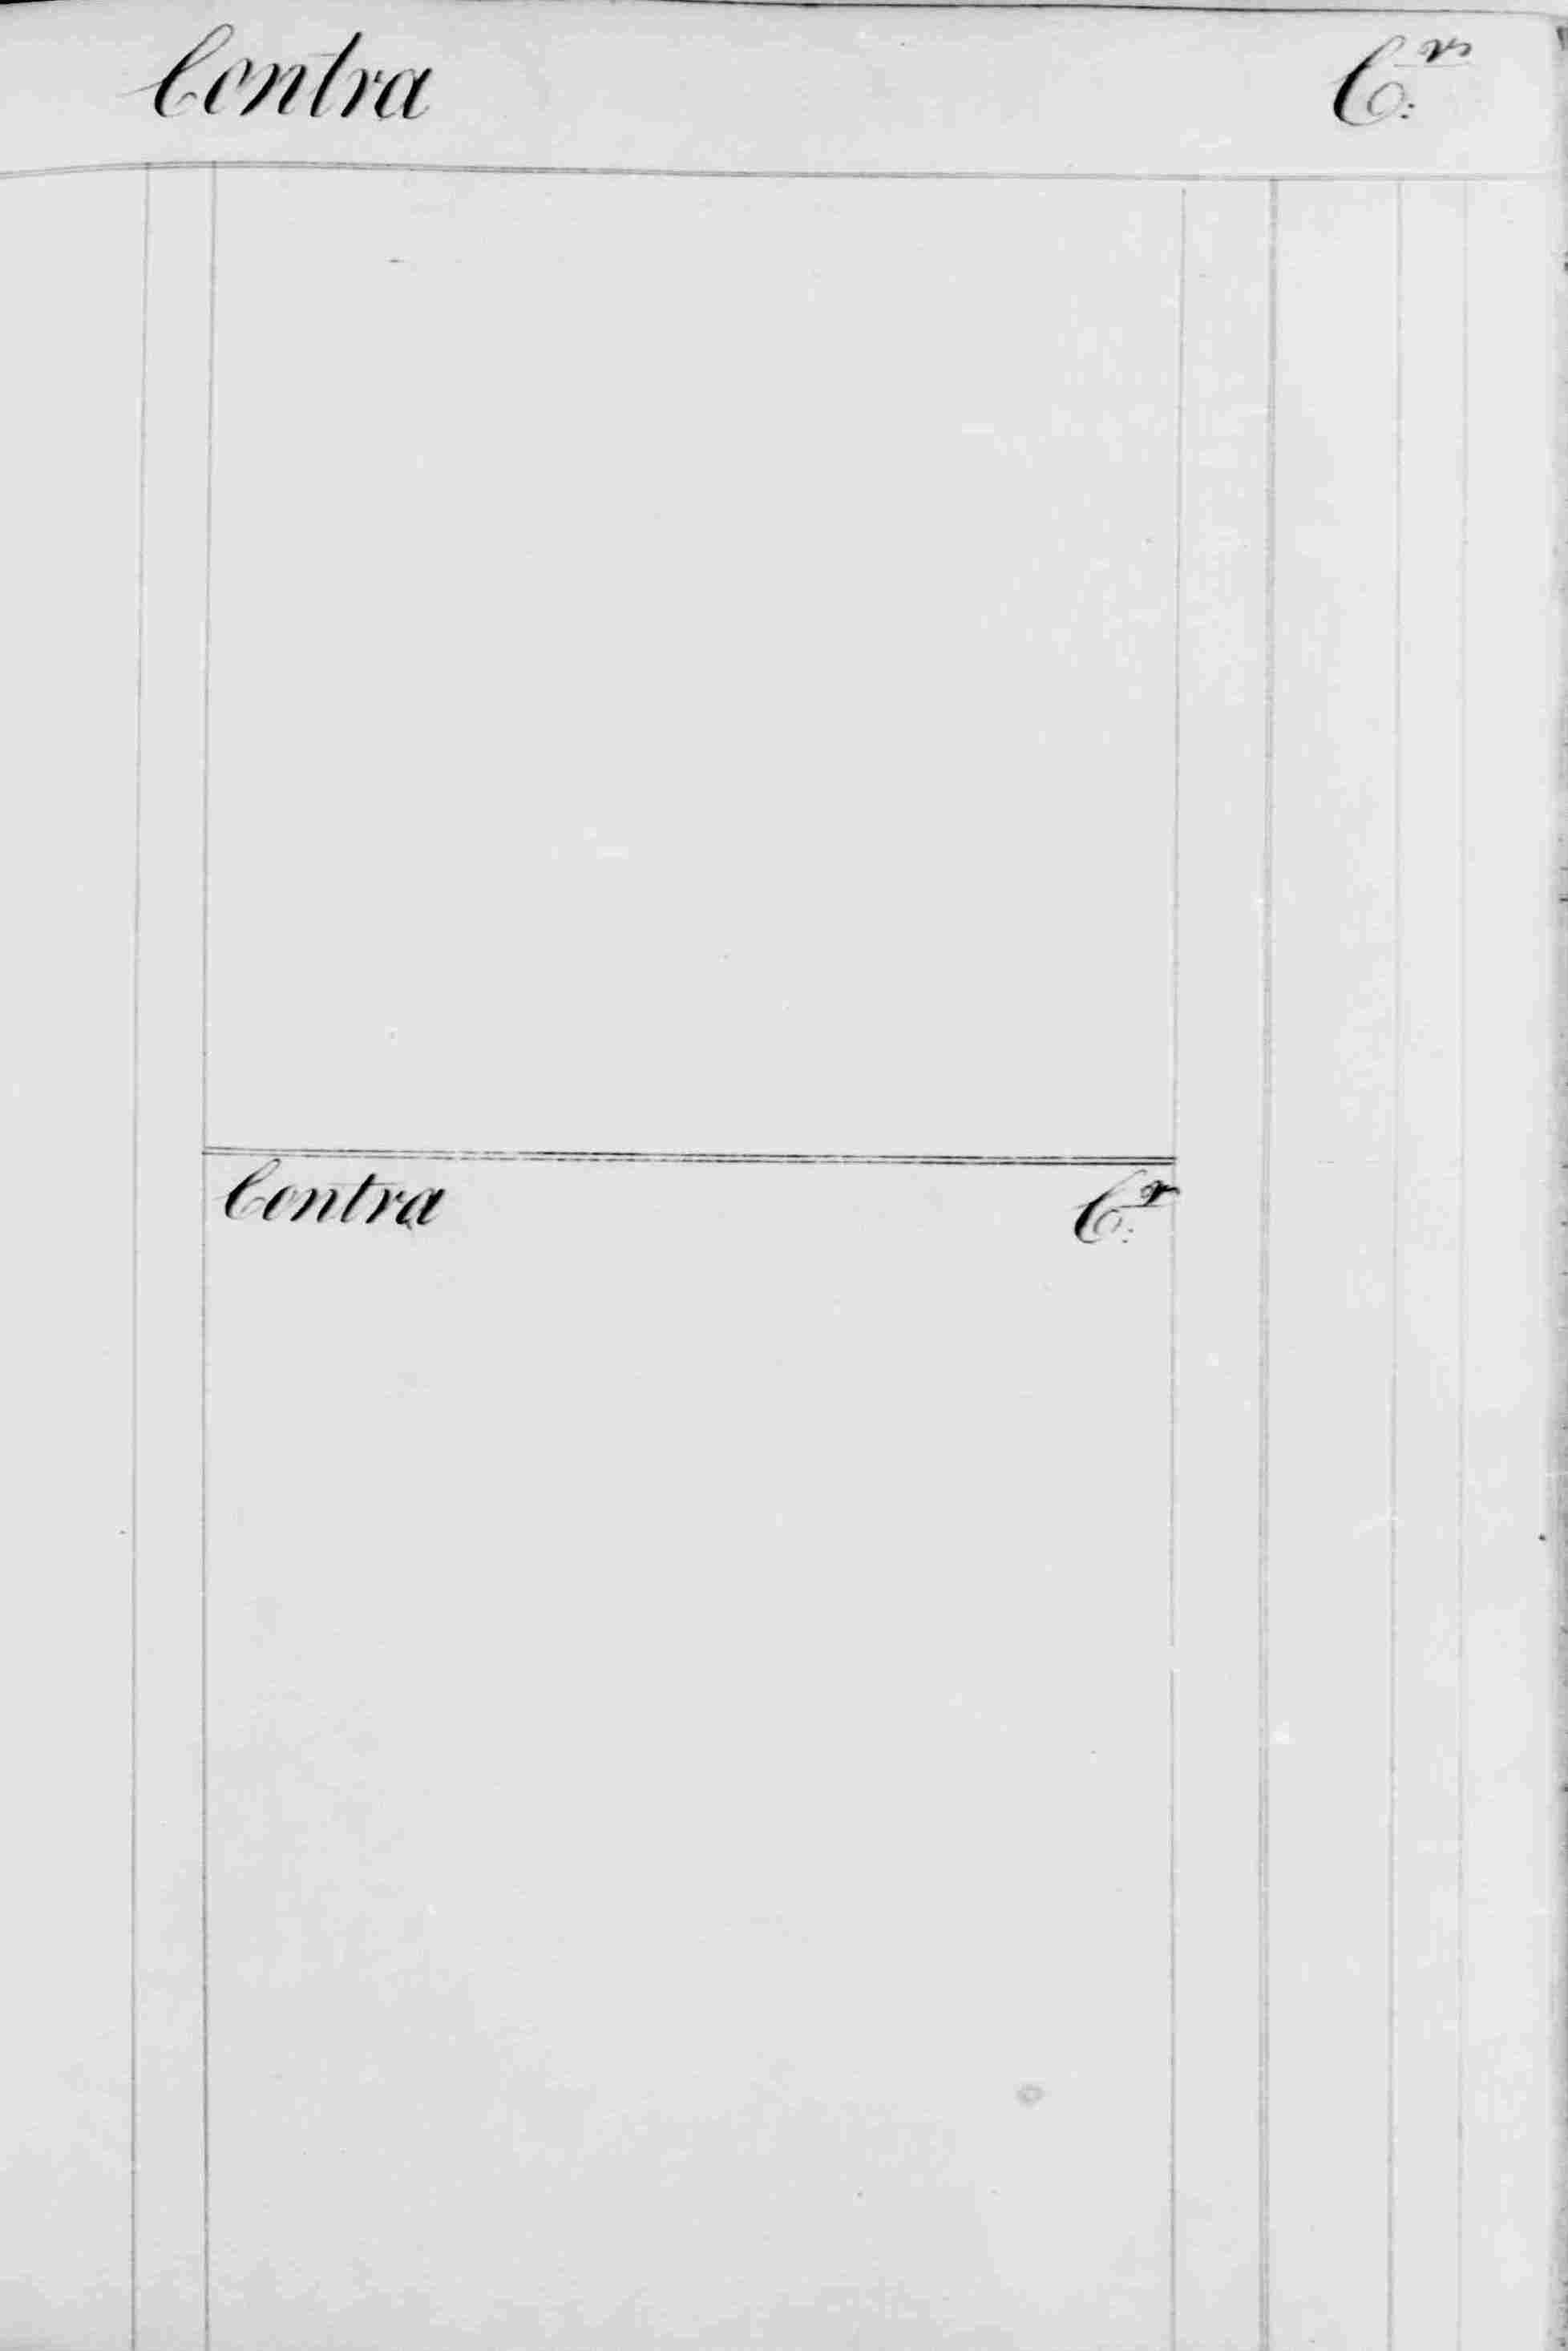 Ledger B, folio 293, right side